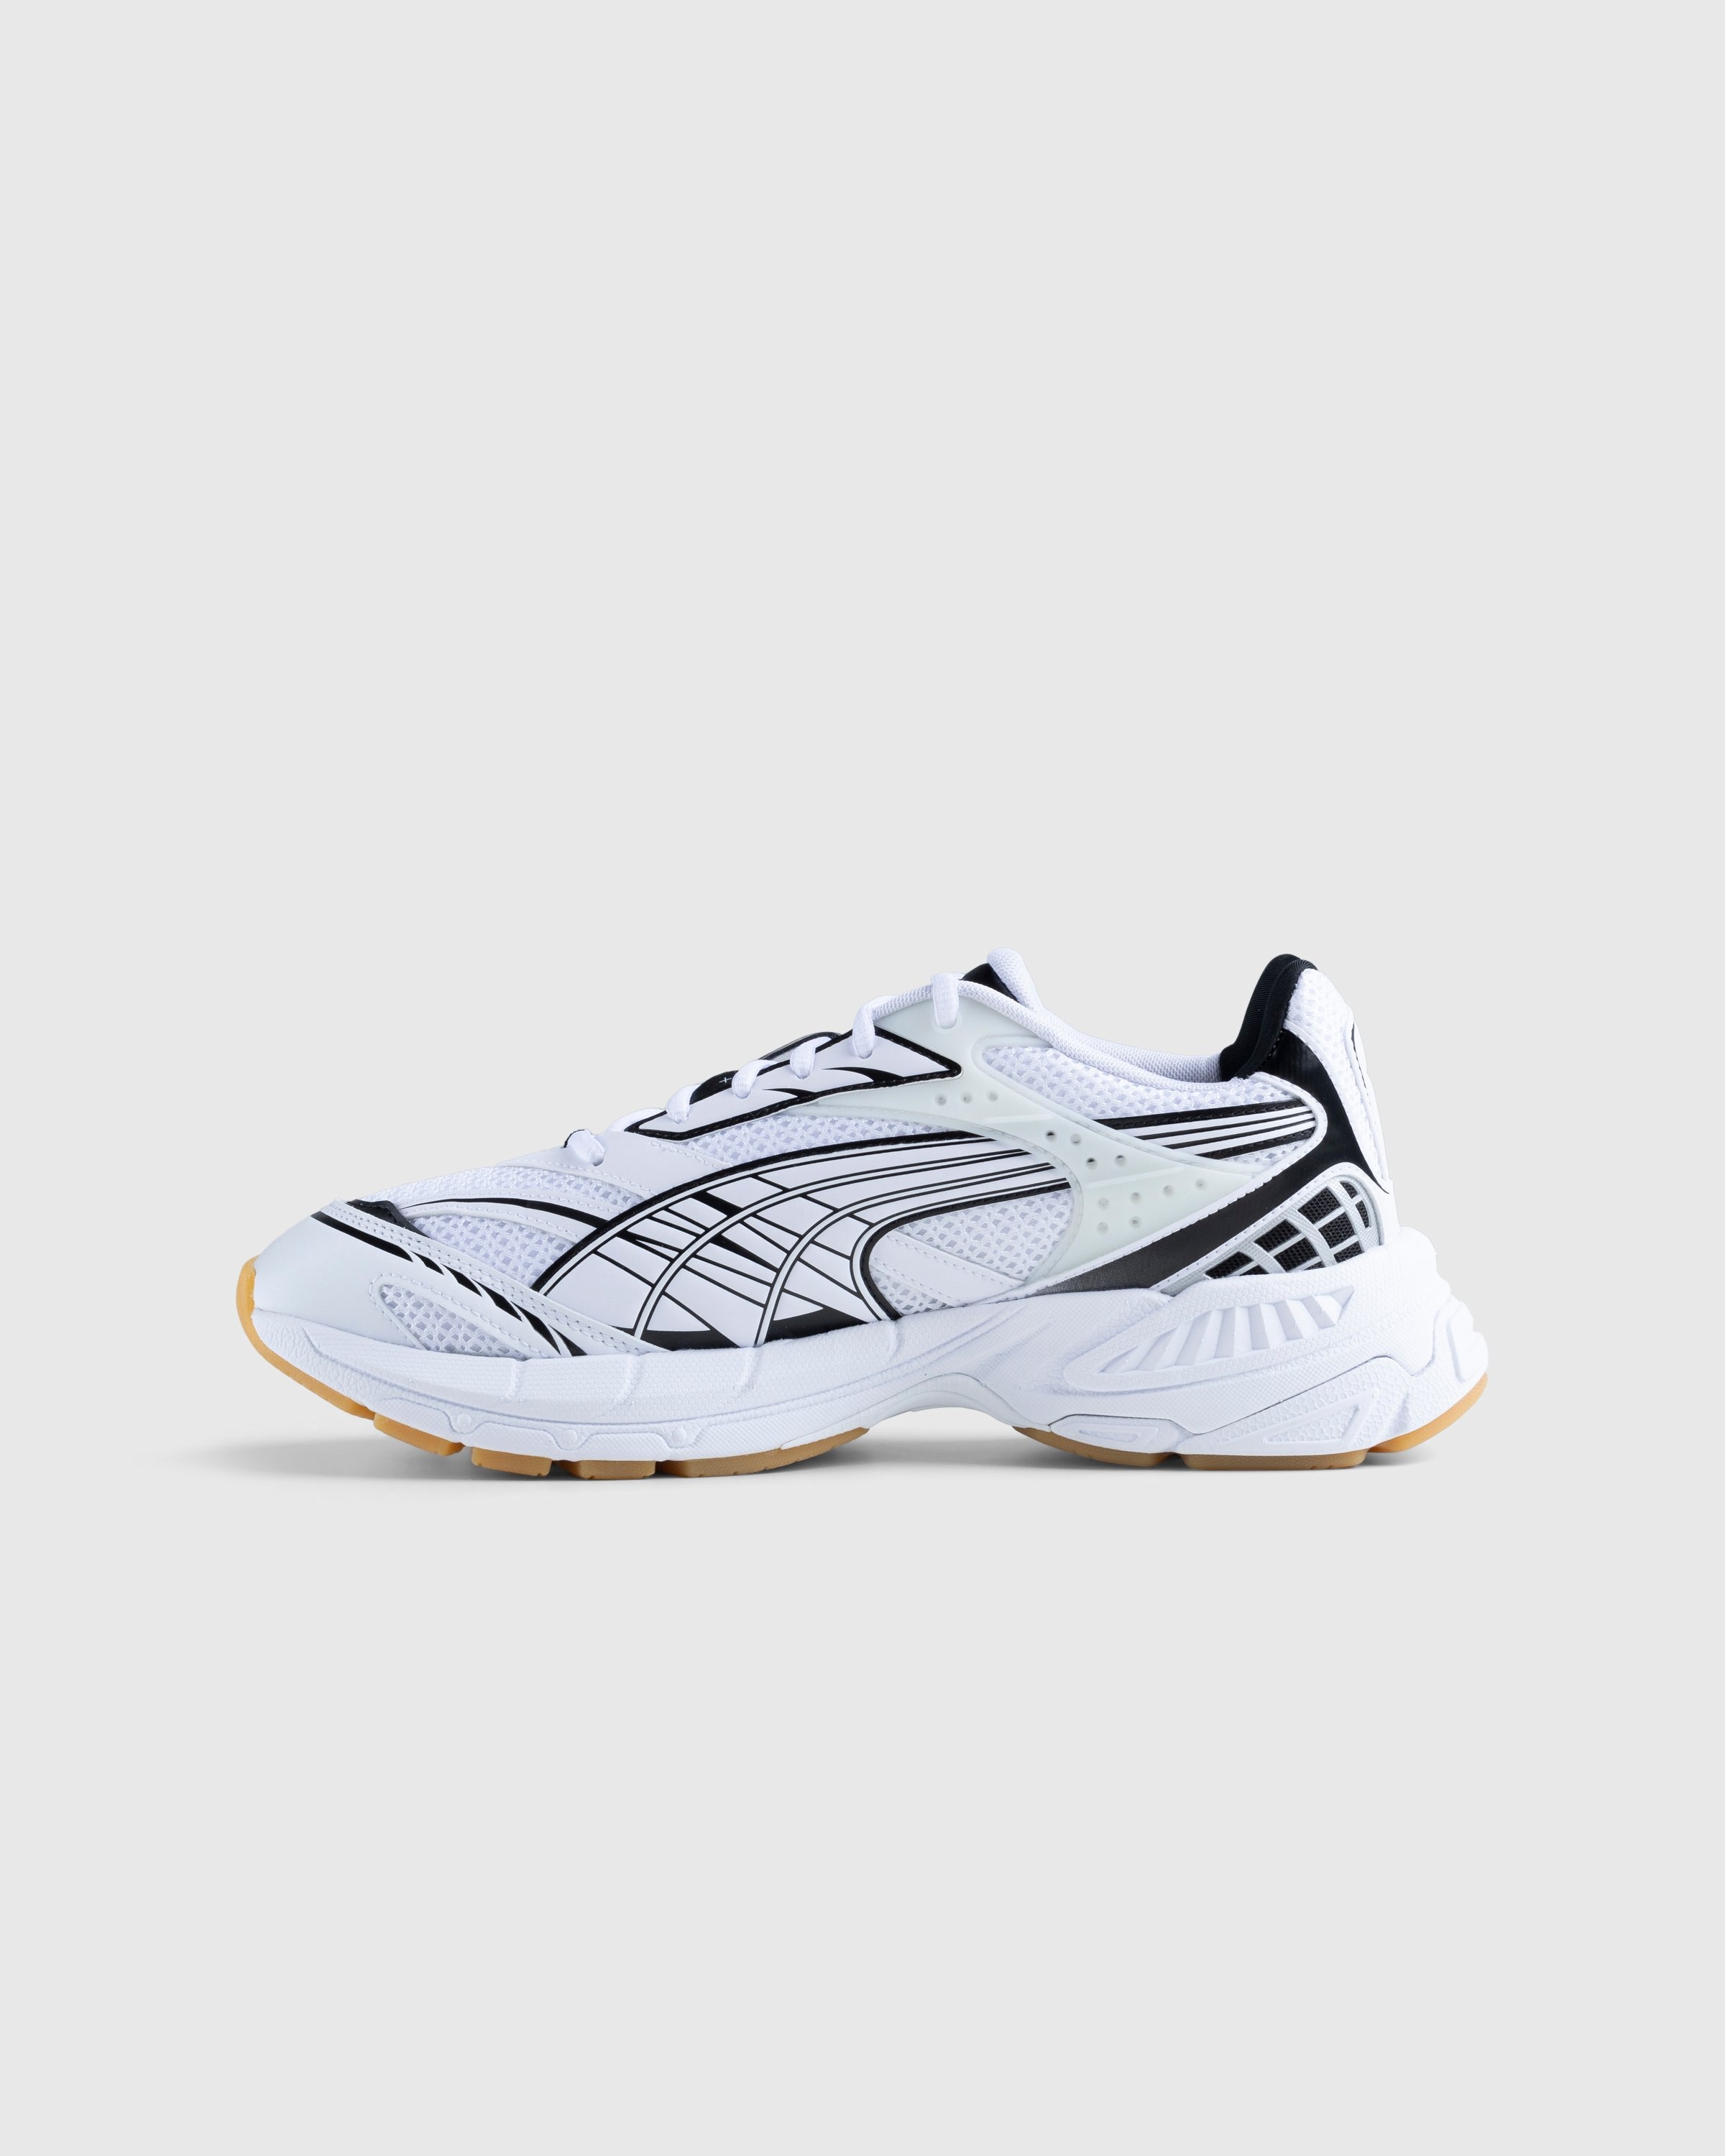 Puma – Velophasis Technisch White - Sneakers - White - Image 2